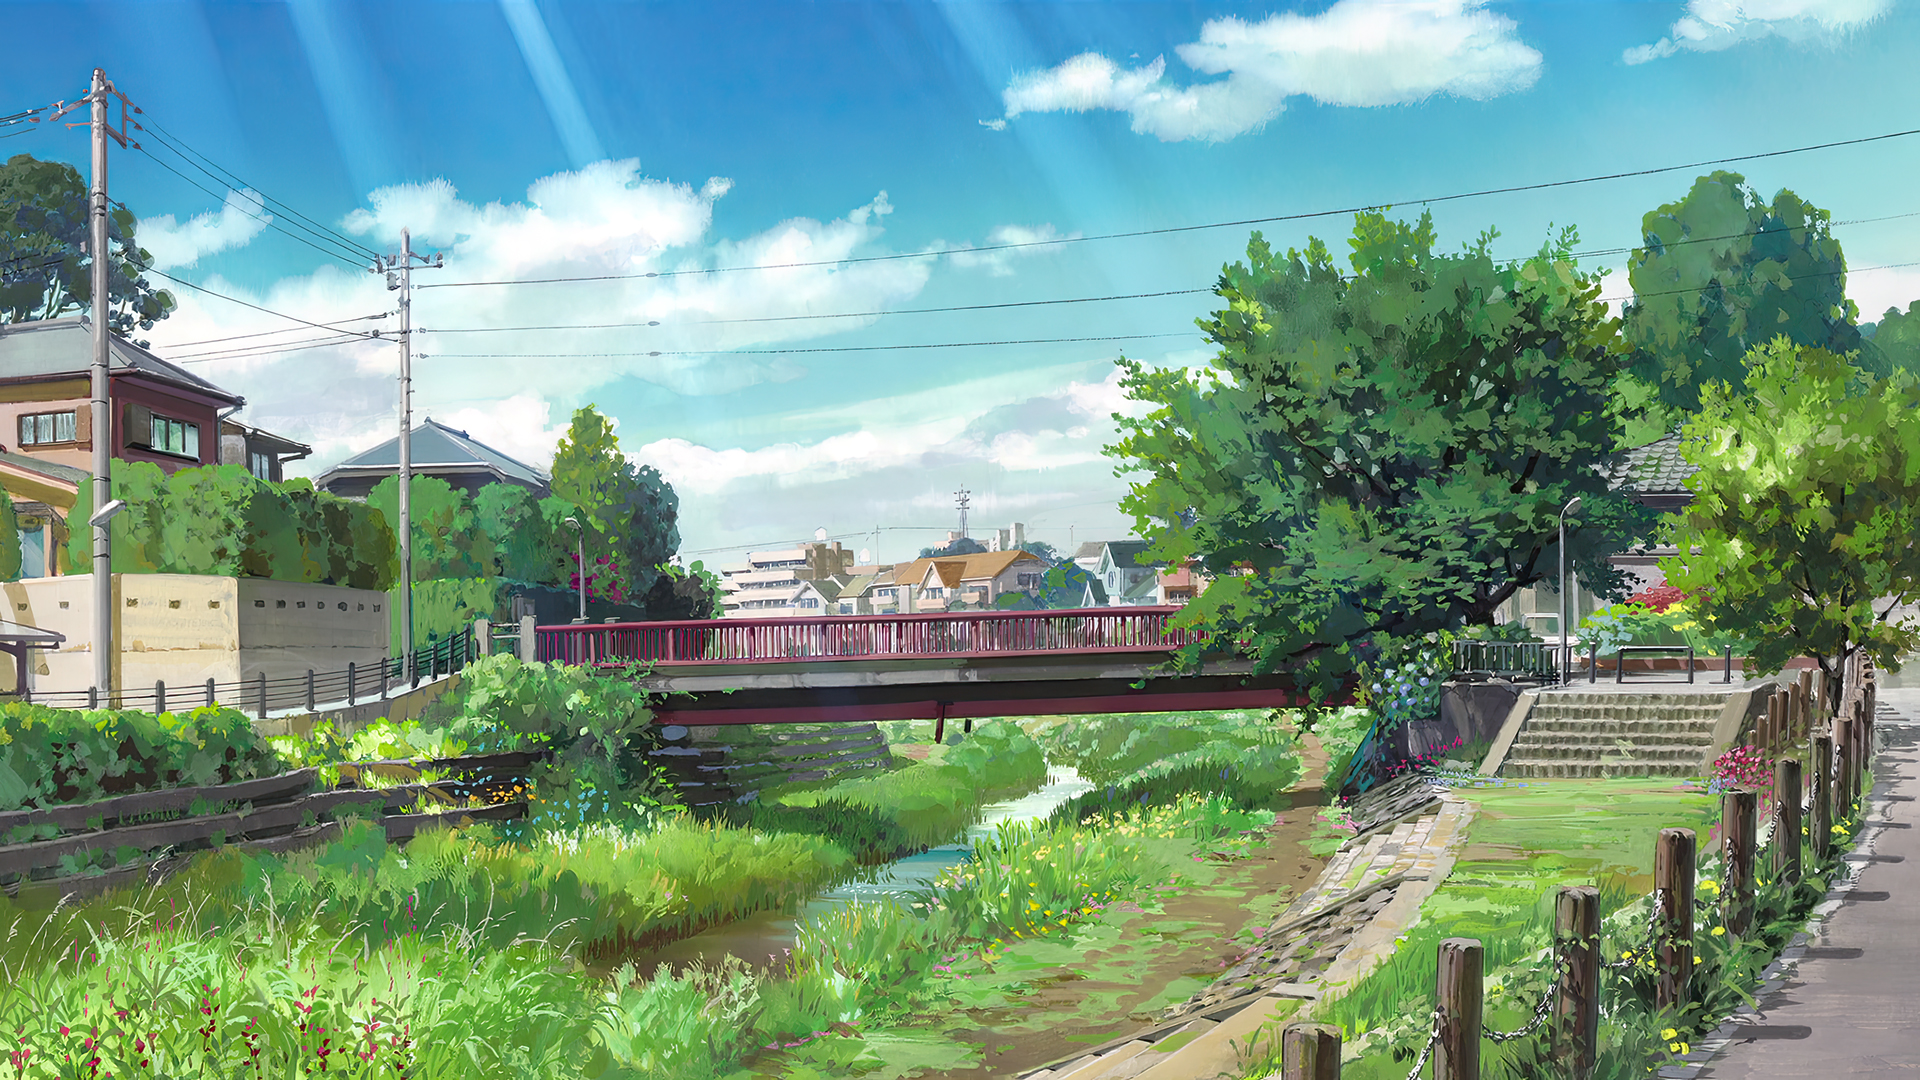 Anime 1920x1080 Kari-gurashi no Arietti animated movies anime animation Studio Ghibli film stills sky clouds trees bridge house utility pole grass